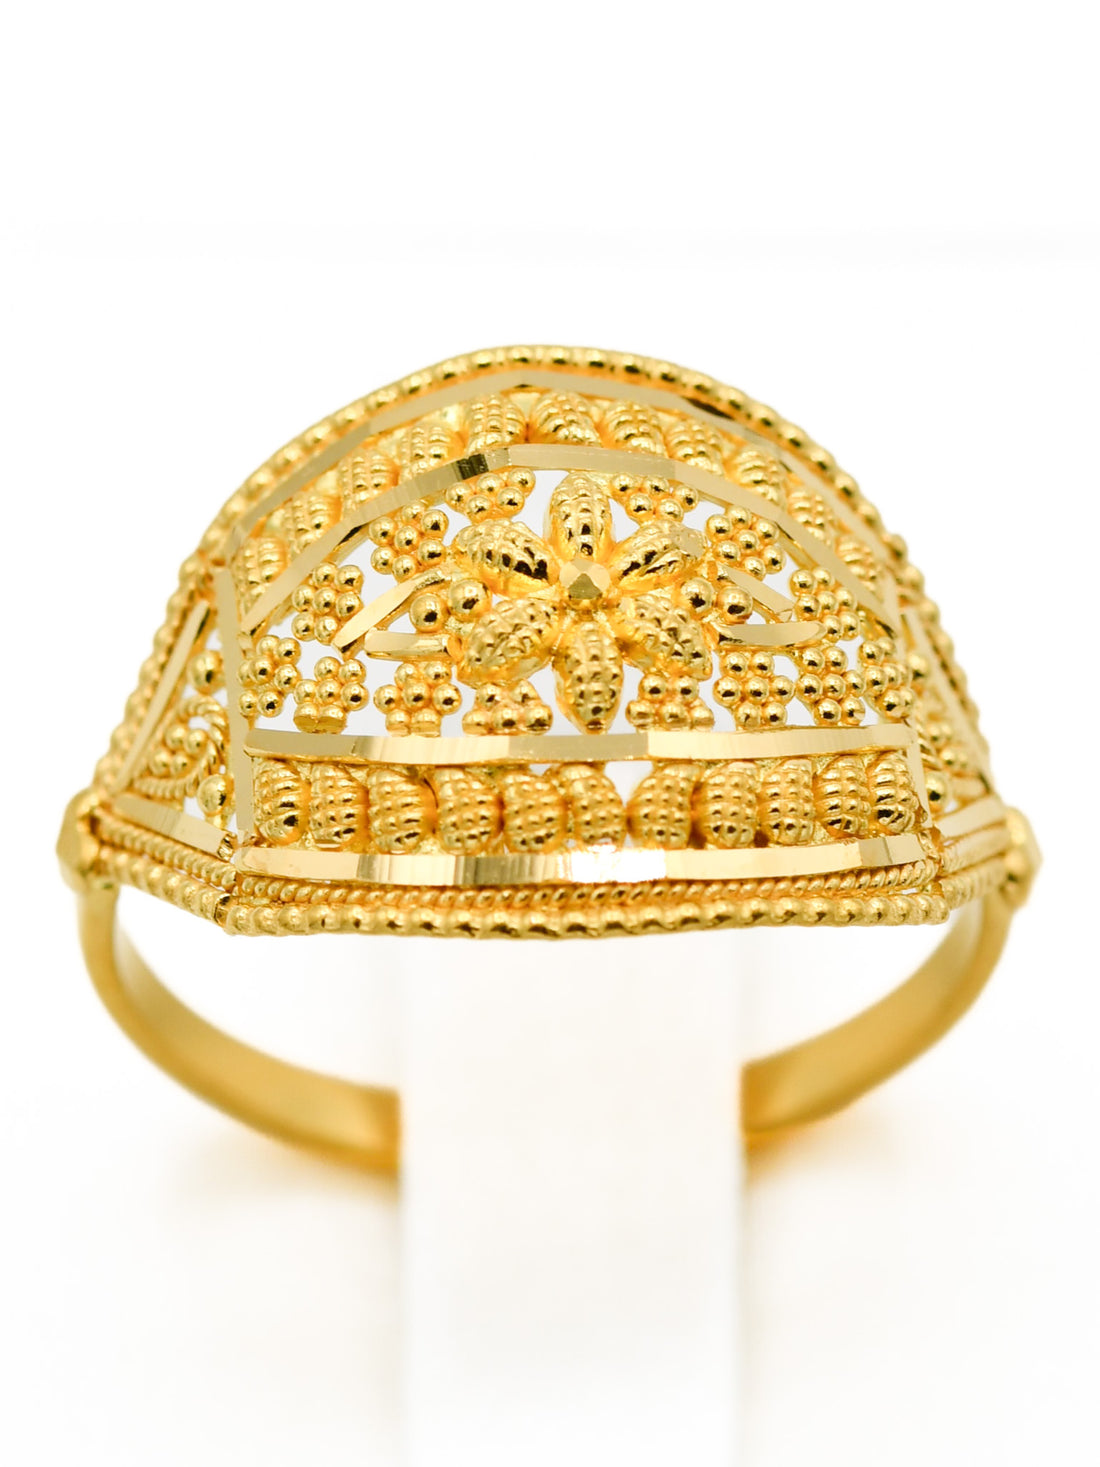 22ct Gold Filigree Ladies Ring - Roop Darshan